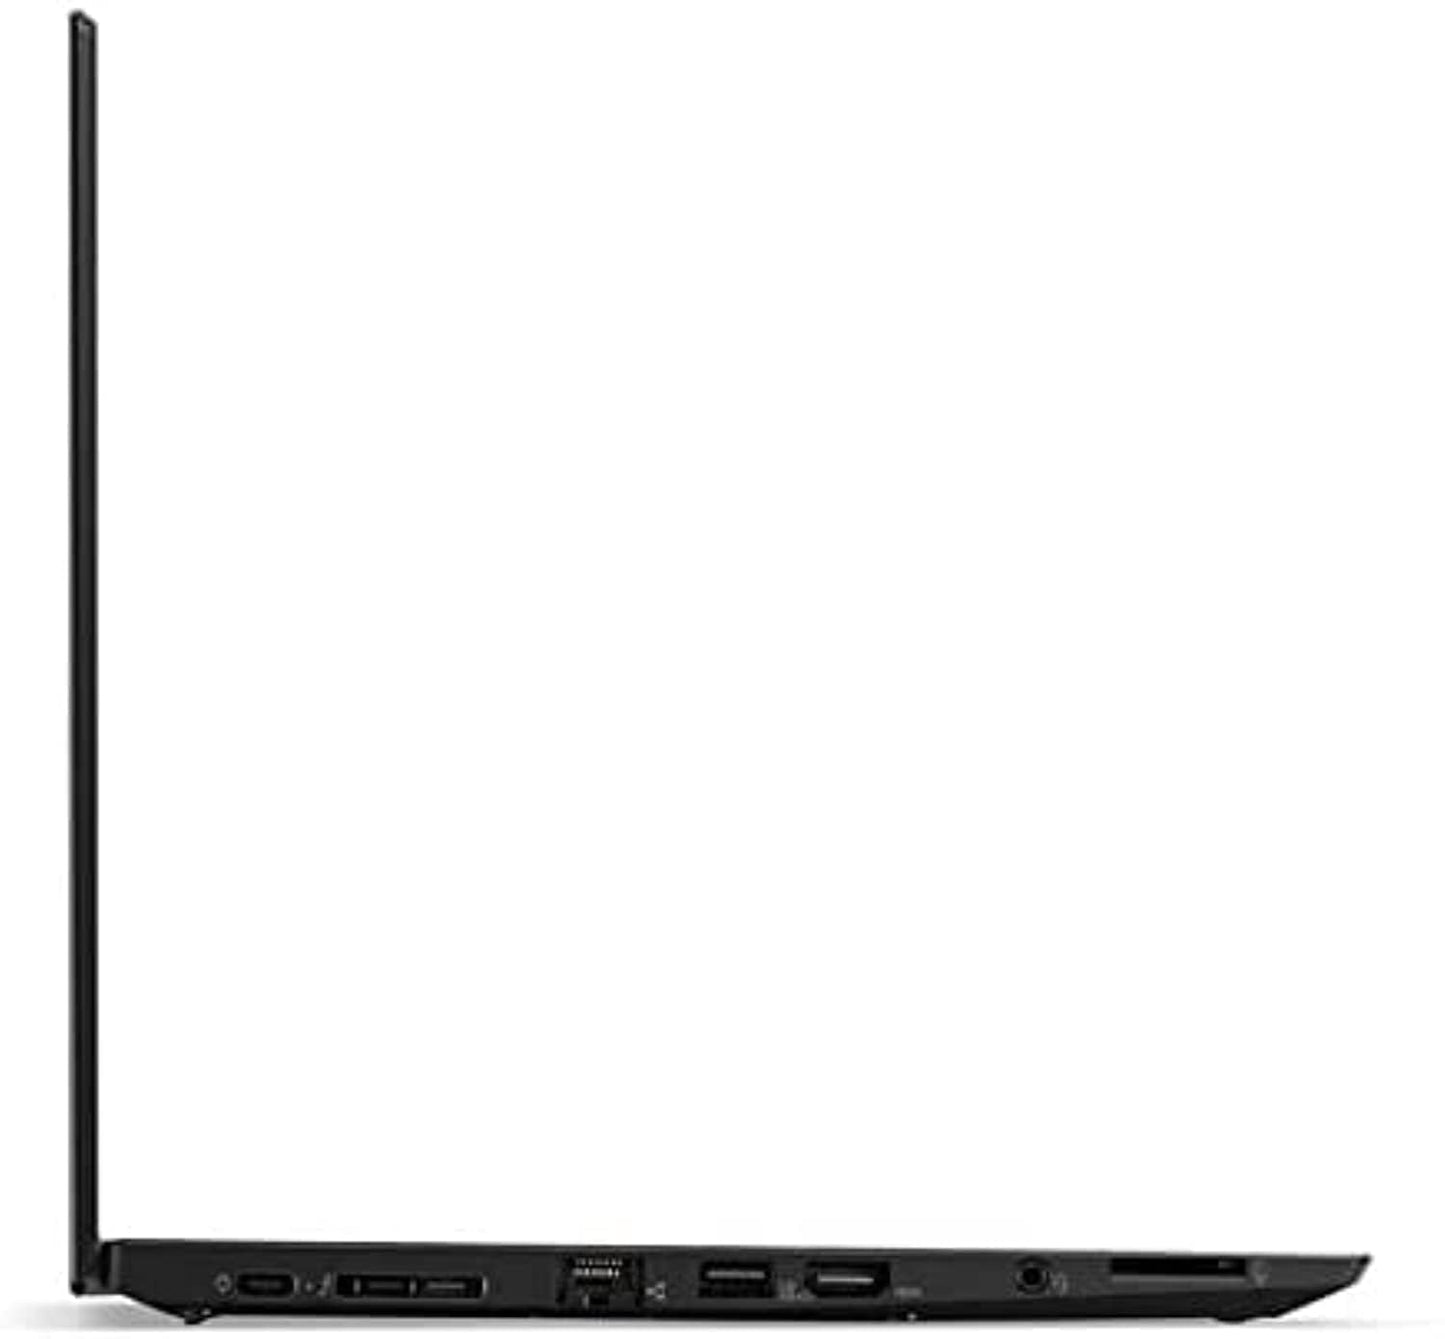 Lenovo ThinkPad T480s Business Laptop Intel Core i5-8th Generation CPU 8GB RAM 256GB SSD 14.1in Display Windows 10 Pro (Renewed)